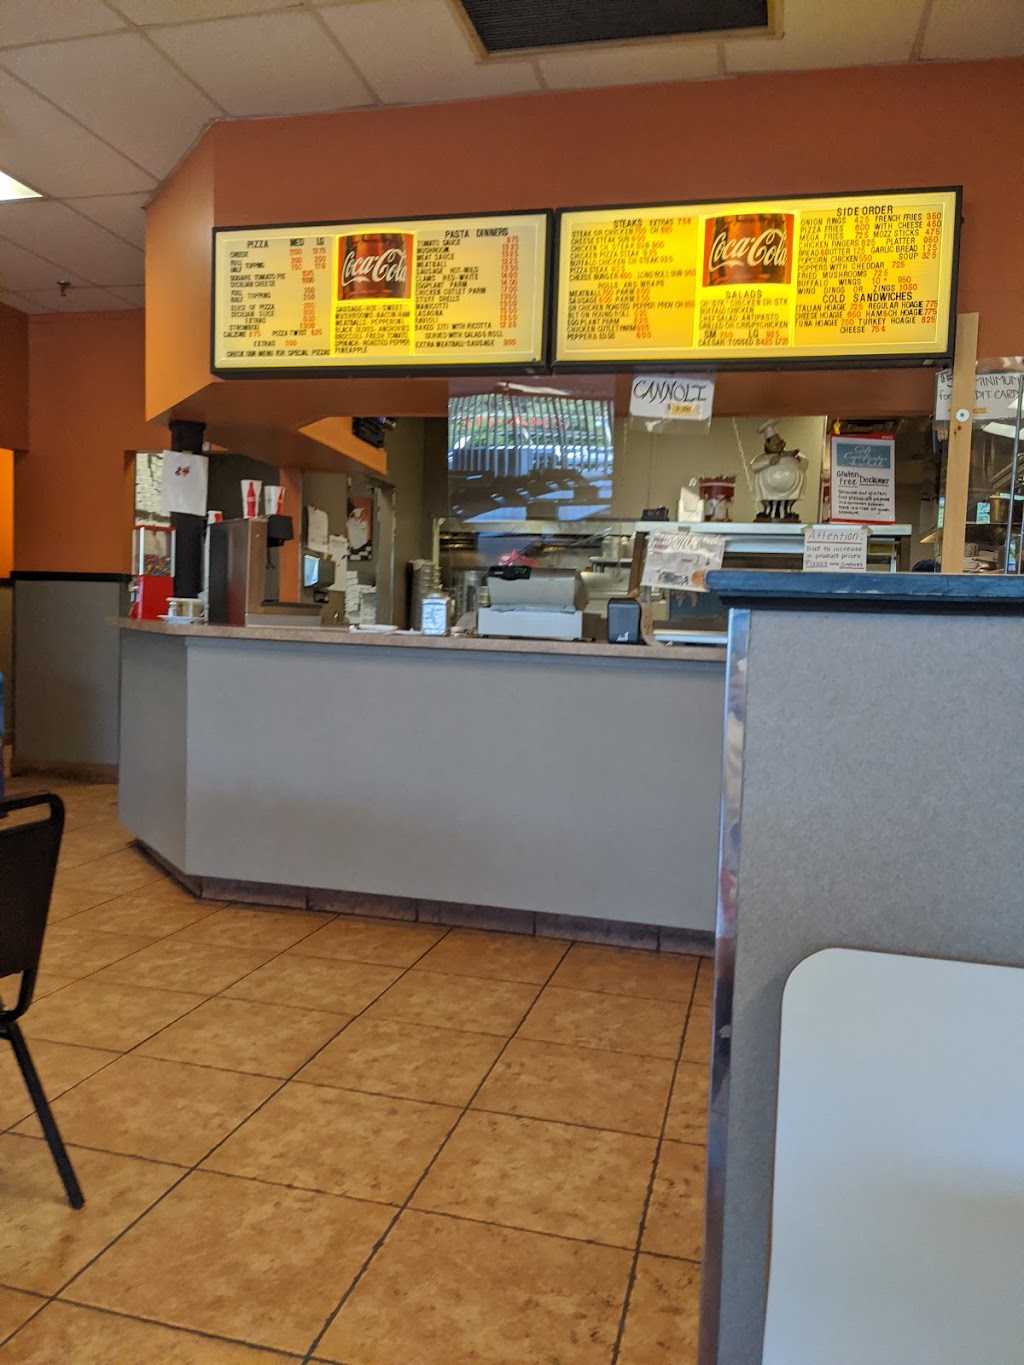 Sals Pizza & Restaurant | 222 Bridgeton Pike, Mantua Township, NJ 08051 | Phone: (856) 468-2226